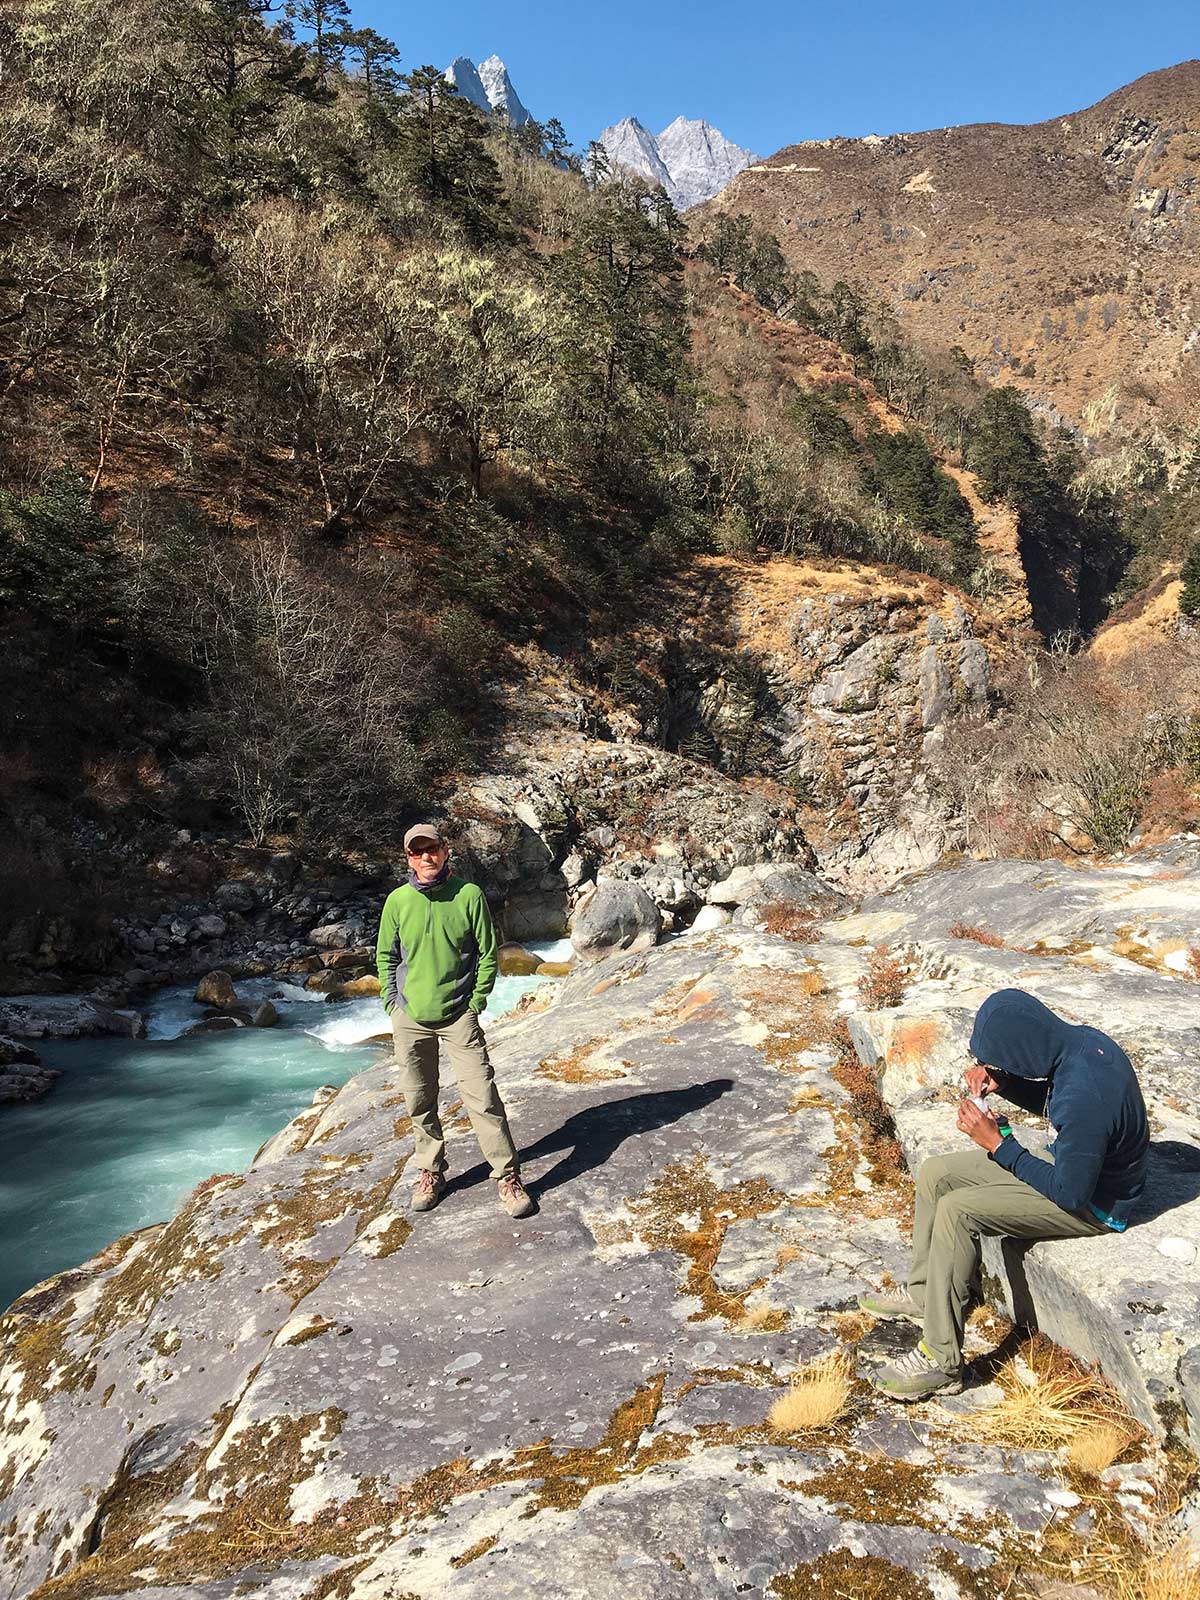 Randonneurs, Dudh Kosi, Népal / Hikers, Dudh Kosi water, Nepal